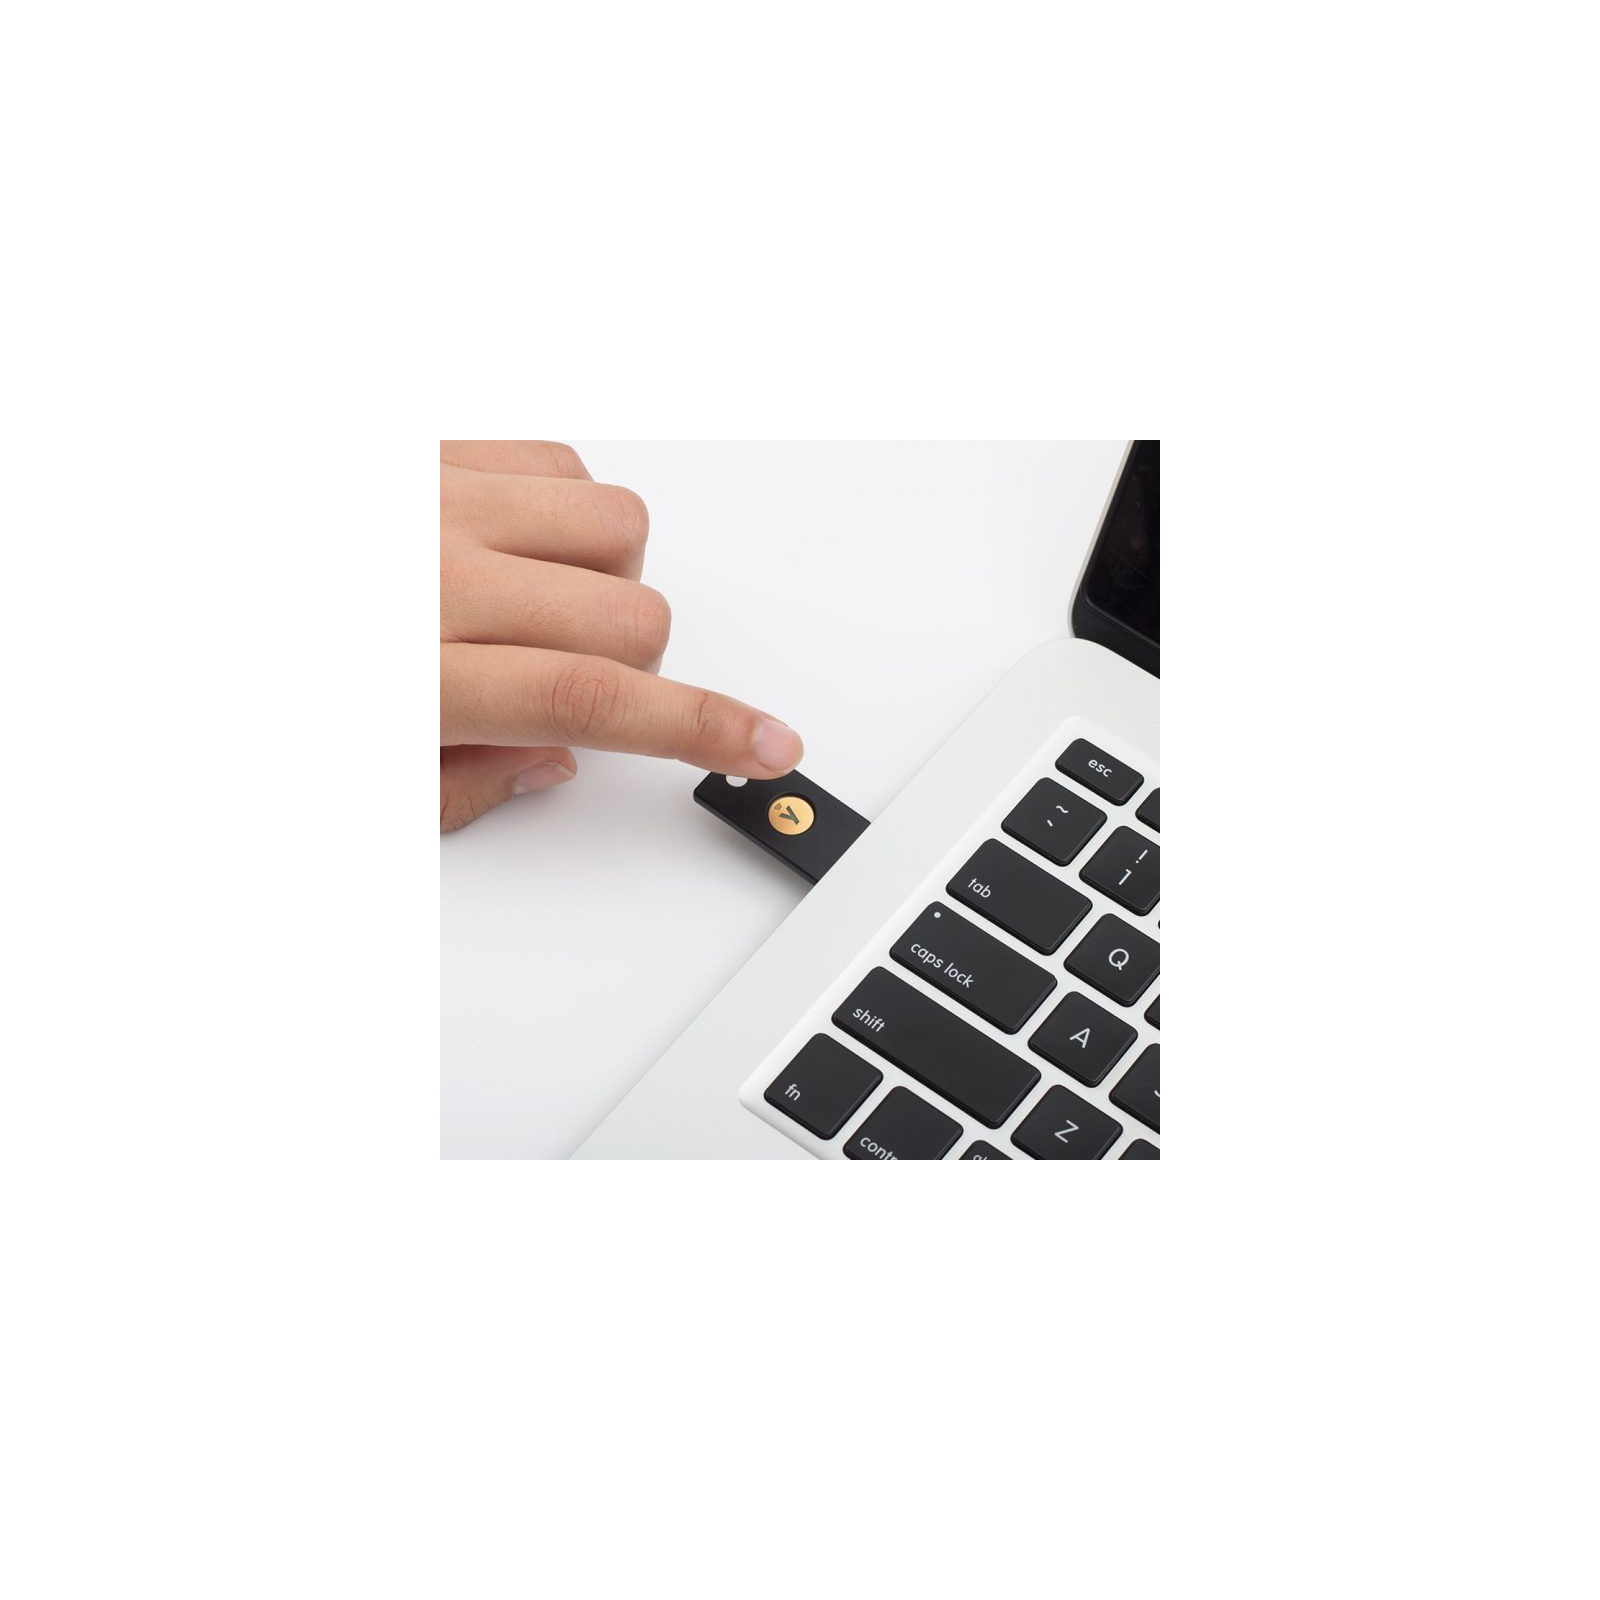 Аппаратный ключ безопасности Yubico YubiKey 5 NFC (YubiKey_5_NFC) изображение 3